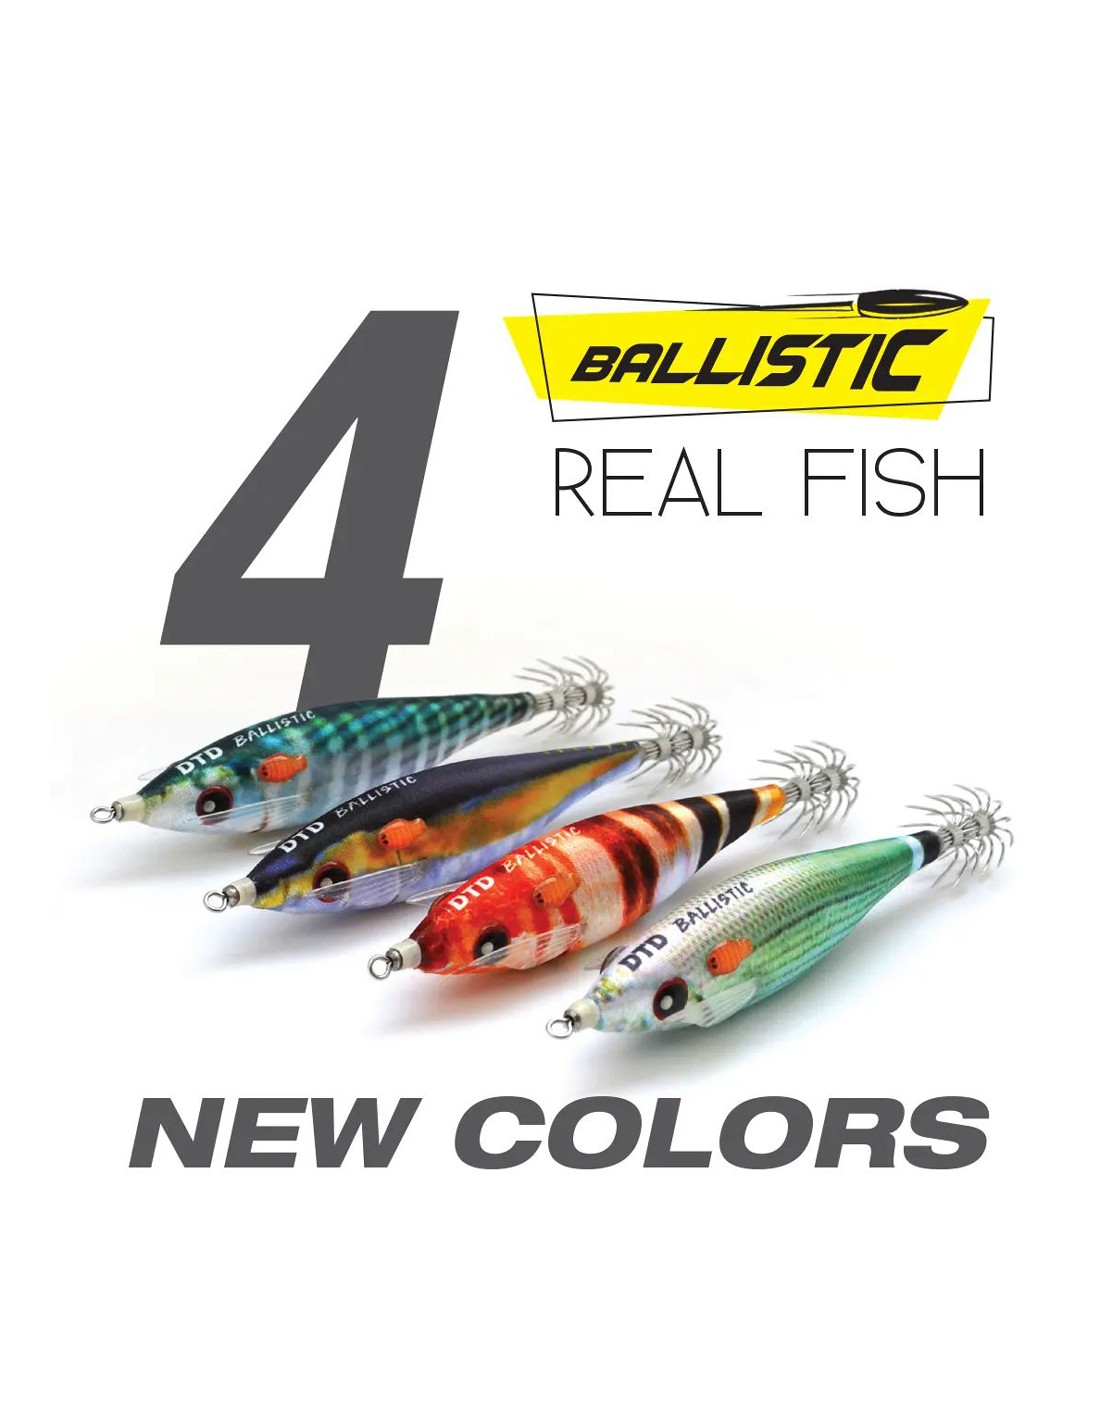 dtd-ballistic-real-fish-new-color.jpg